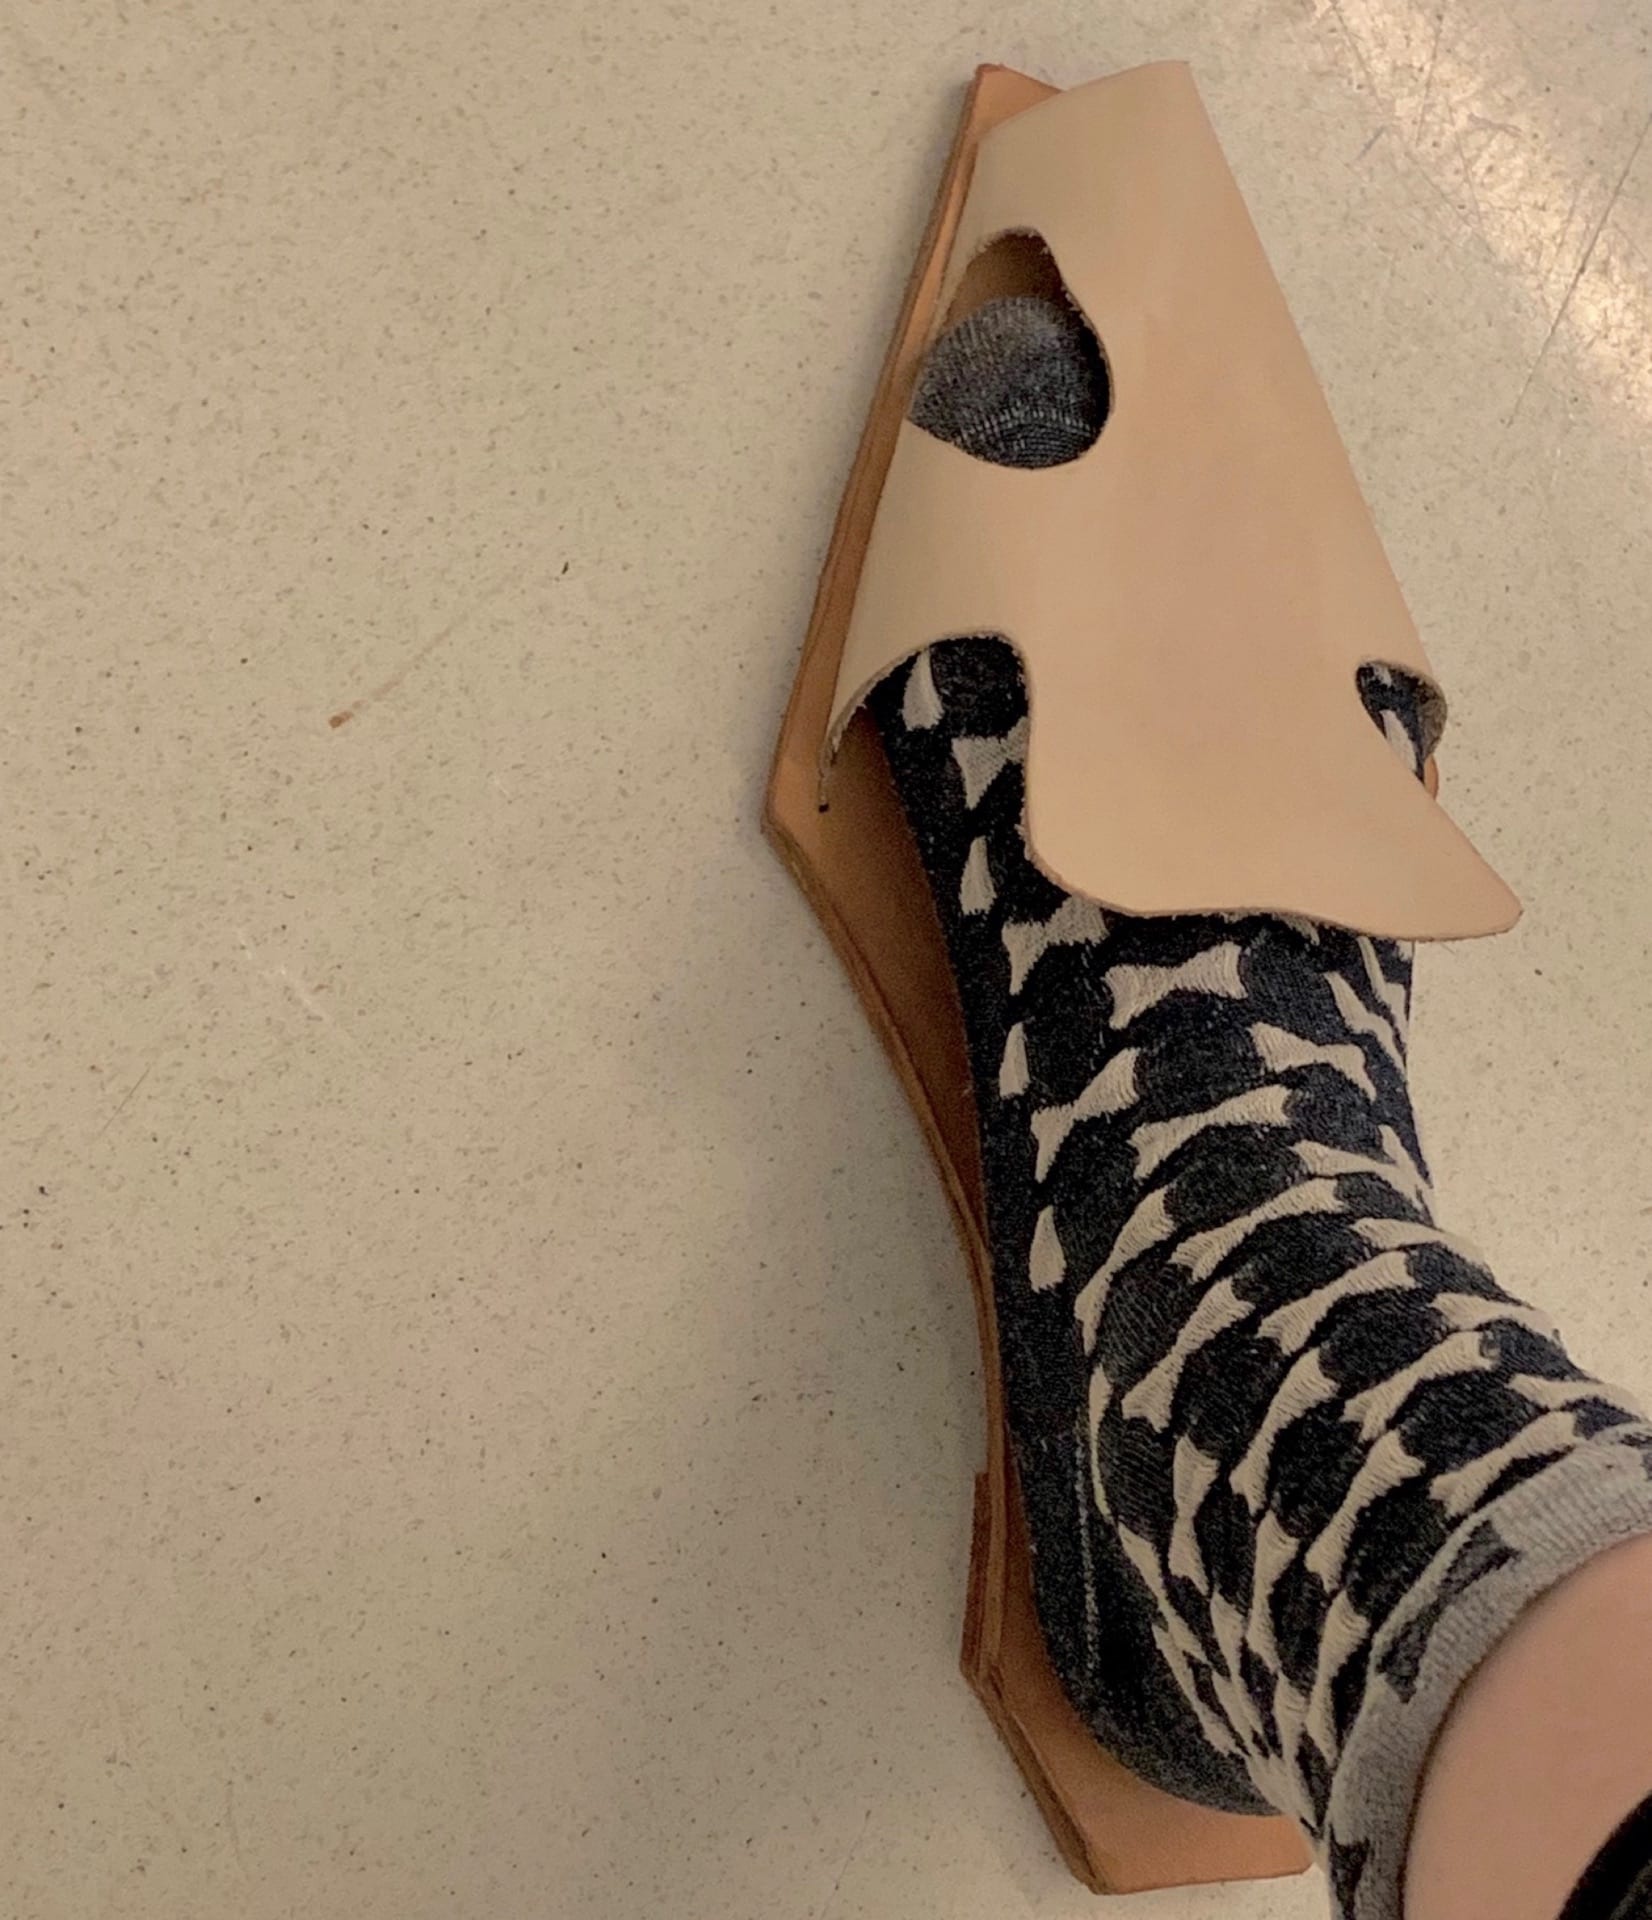 Sandal project：Moo-Cow Sandal